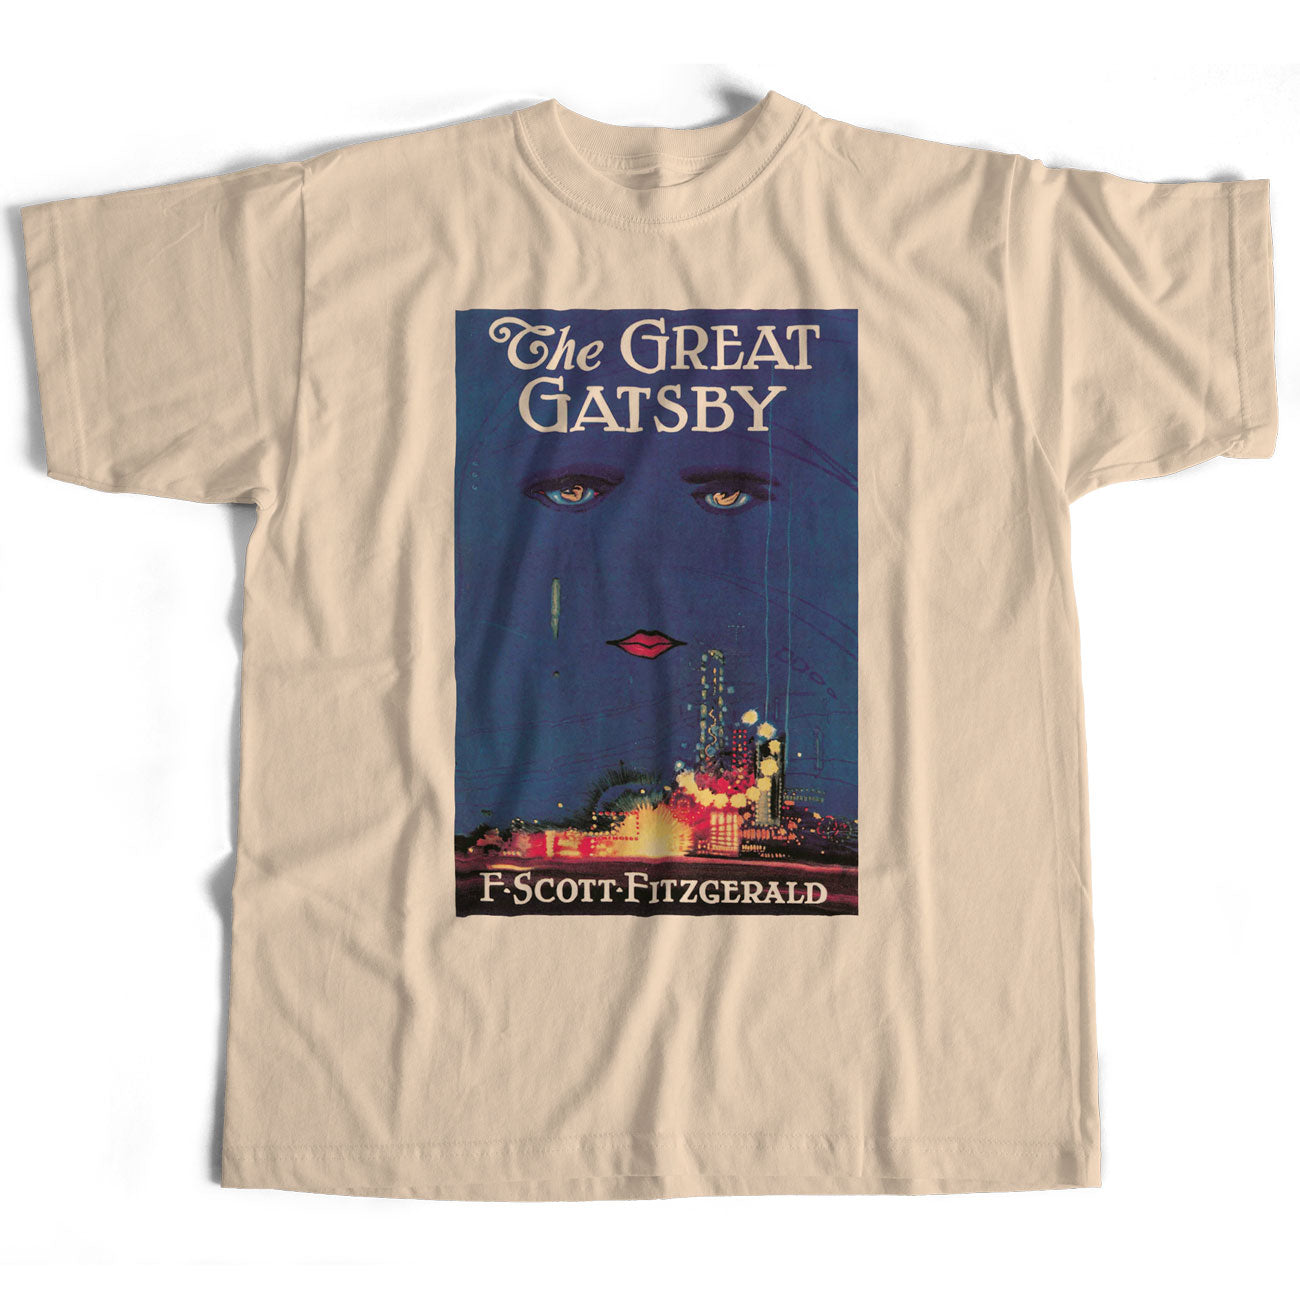 The Great Gatsby 1st Edition Cover T Shirt - F Scott Fitzgerald Classic Literature